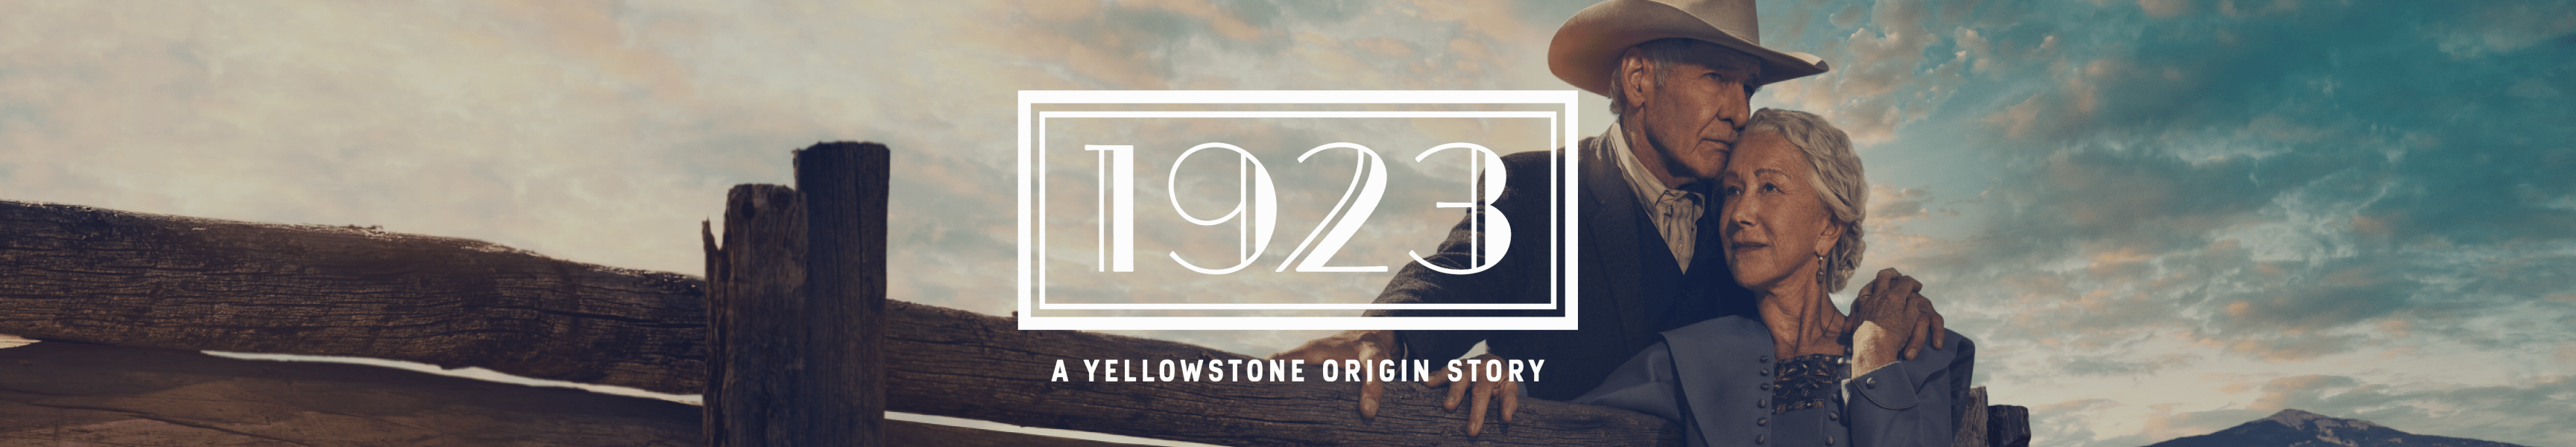 Yellowstone 1923